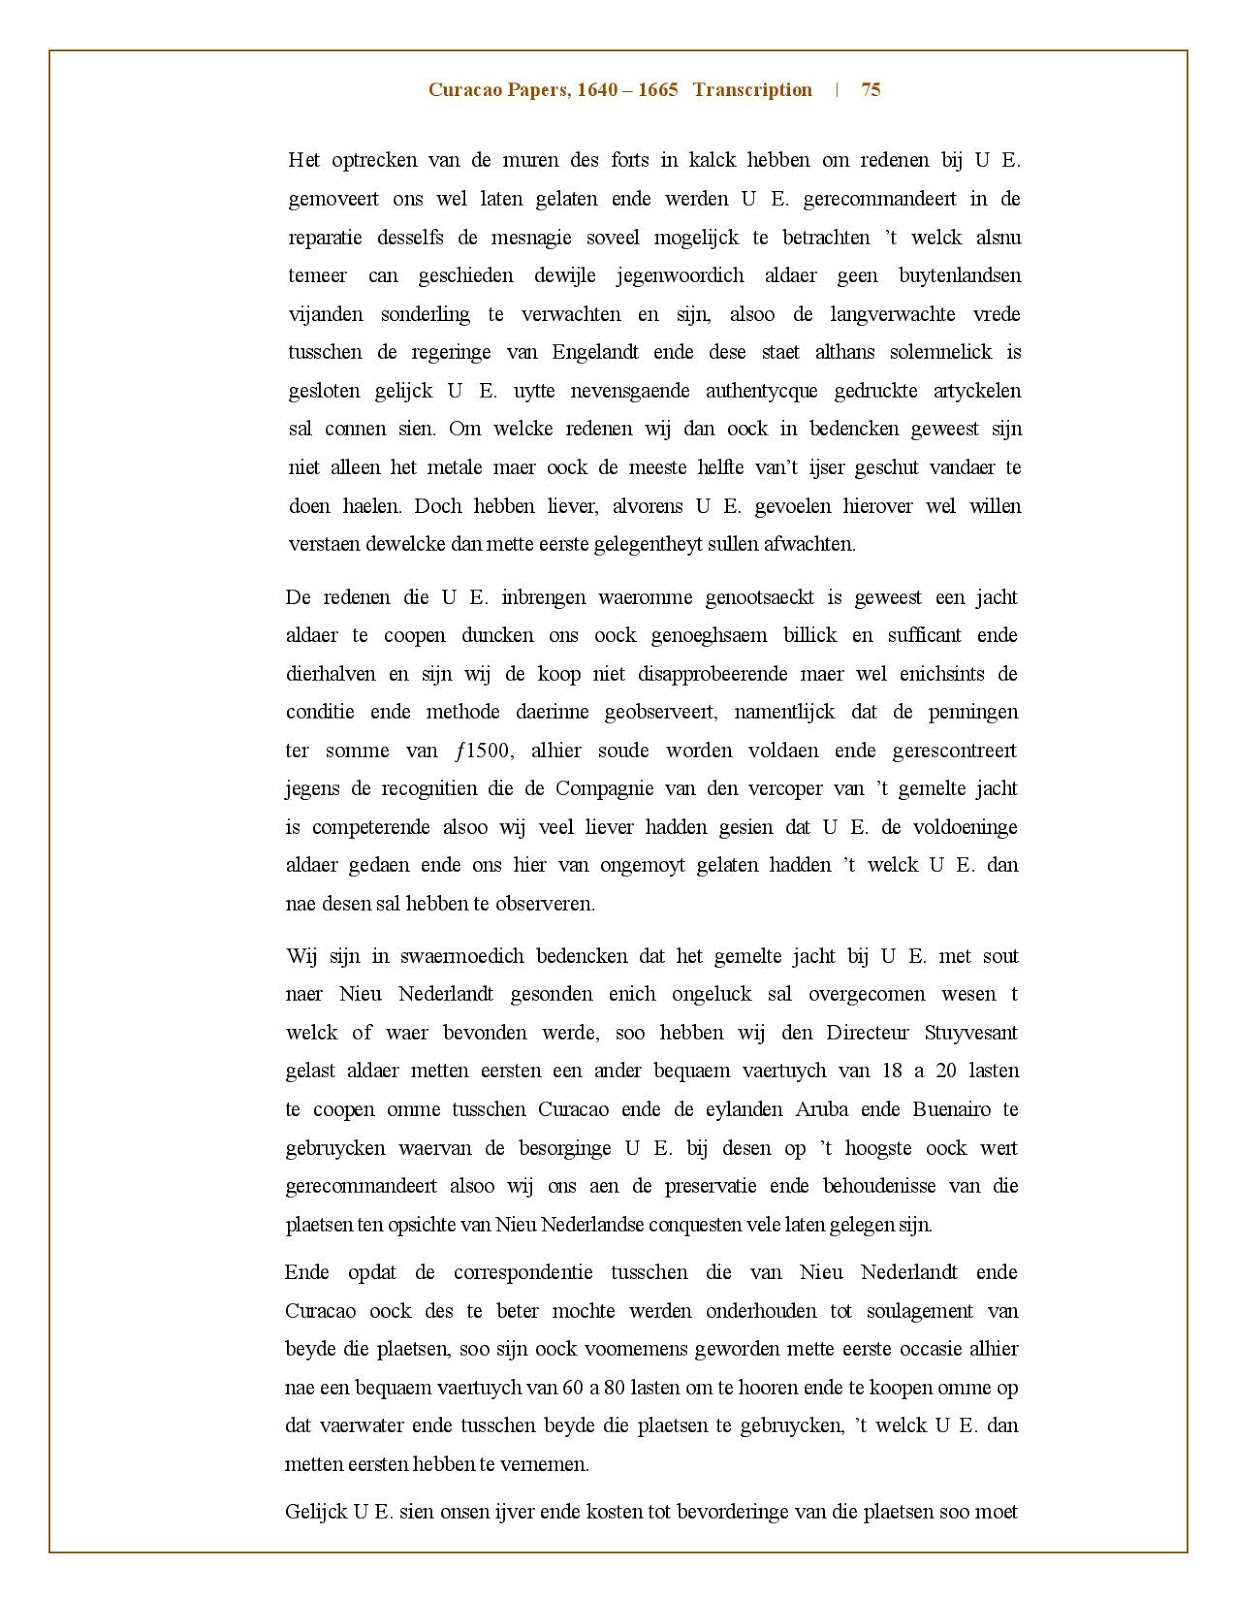 CURACAO PAPERS 1640 - 1665 TRANSCRIPTION (DUTCH)